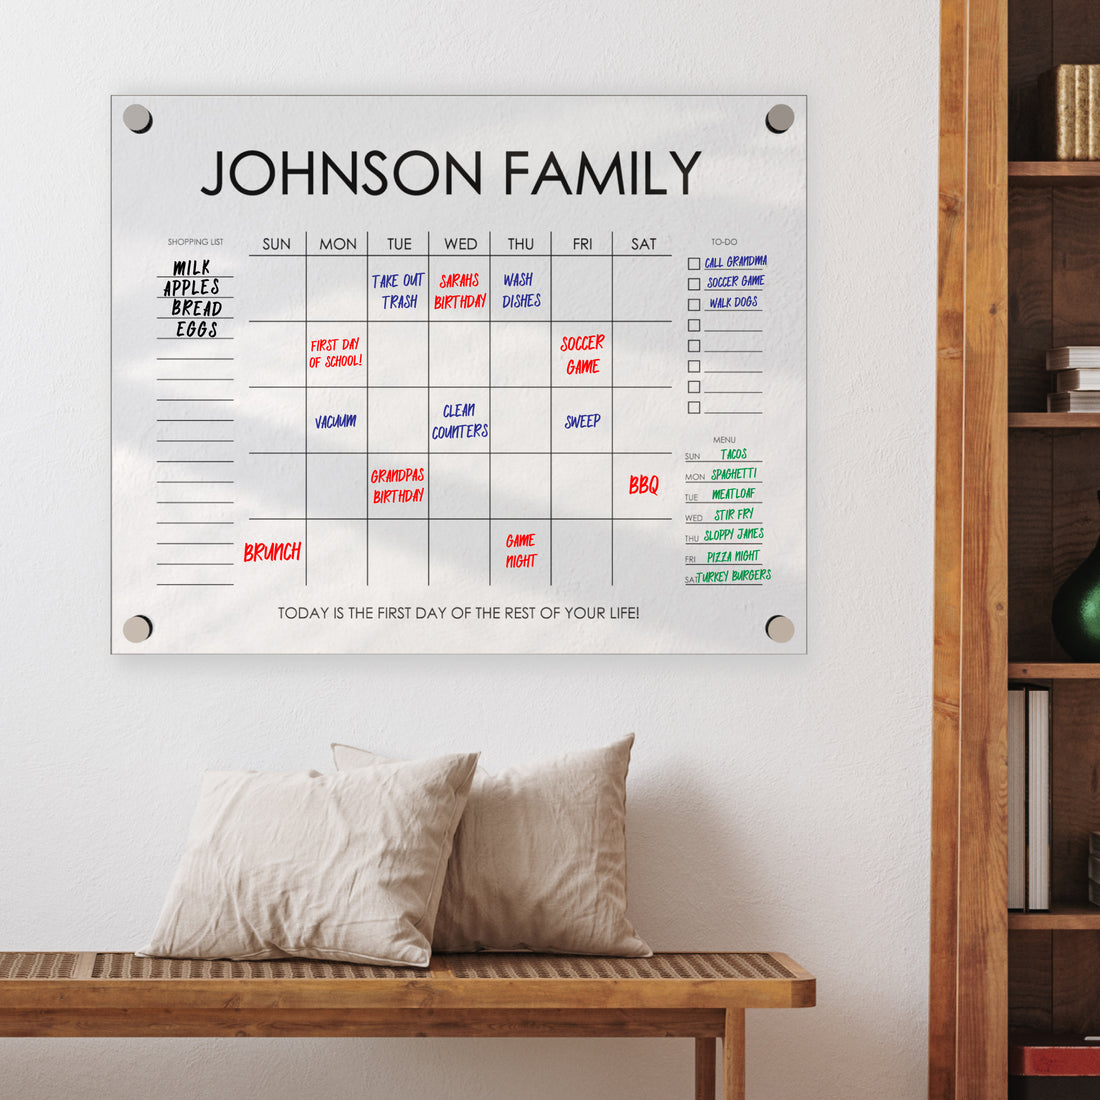 Acrylic Wall Calendar: Get Organized With Style